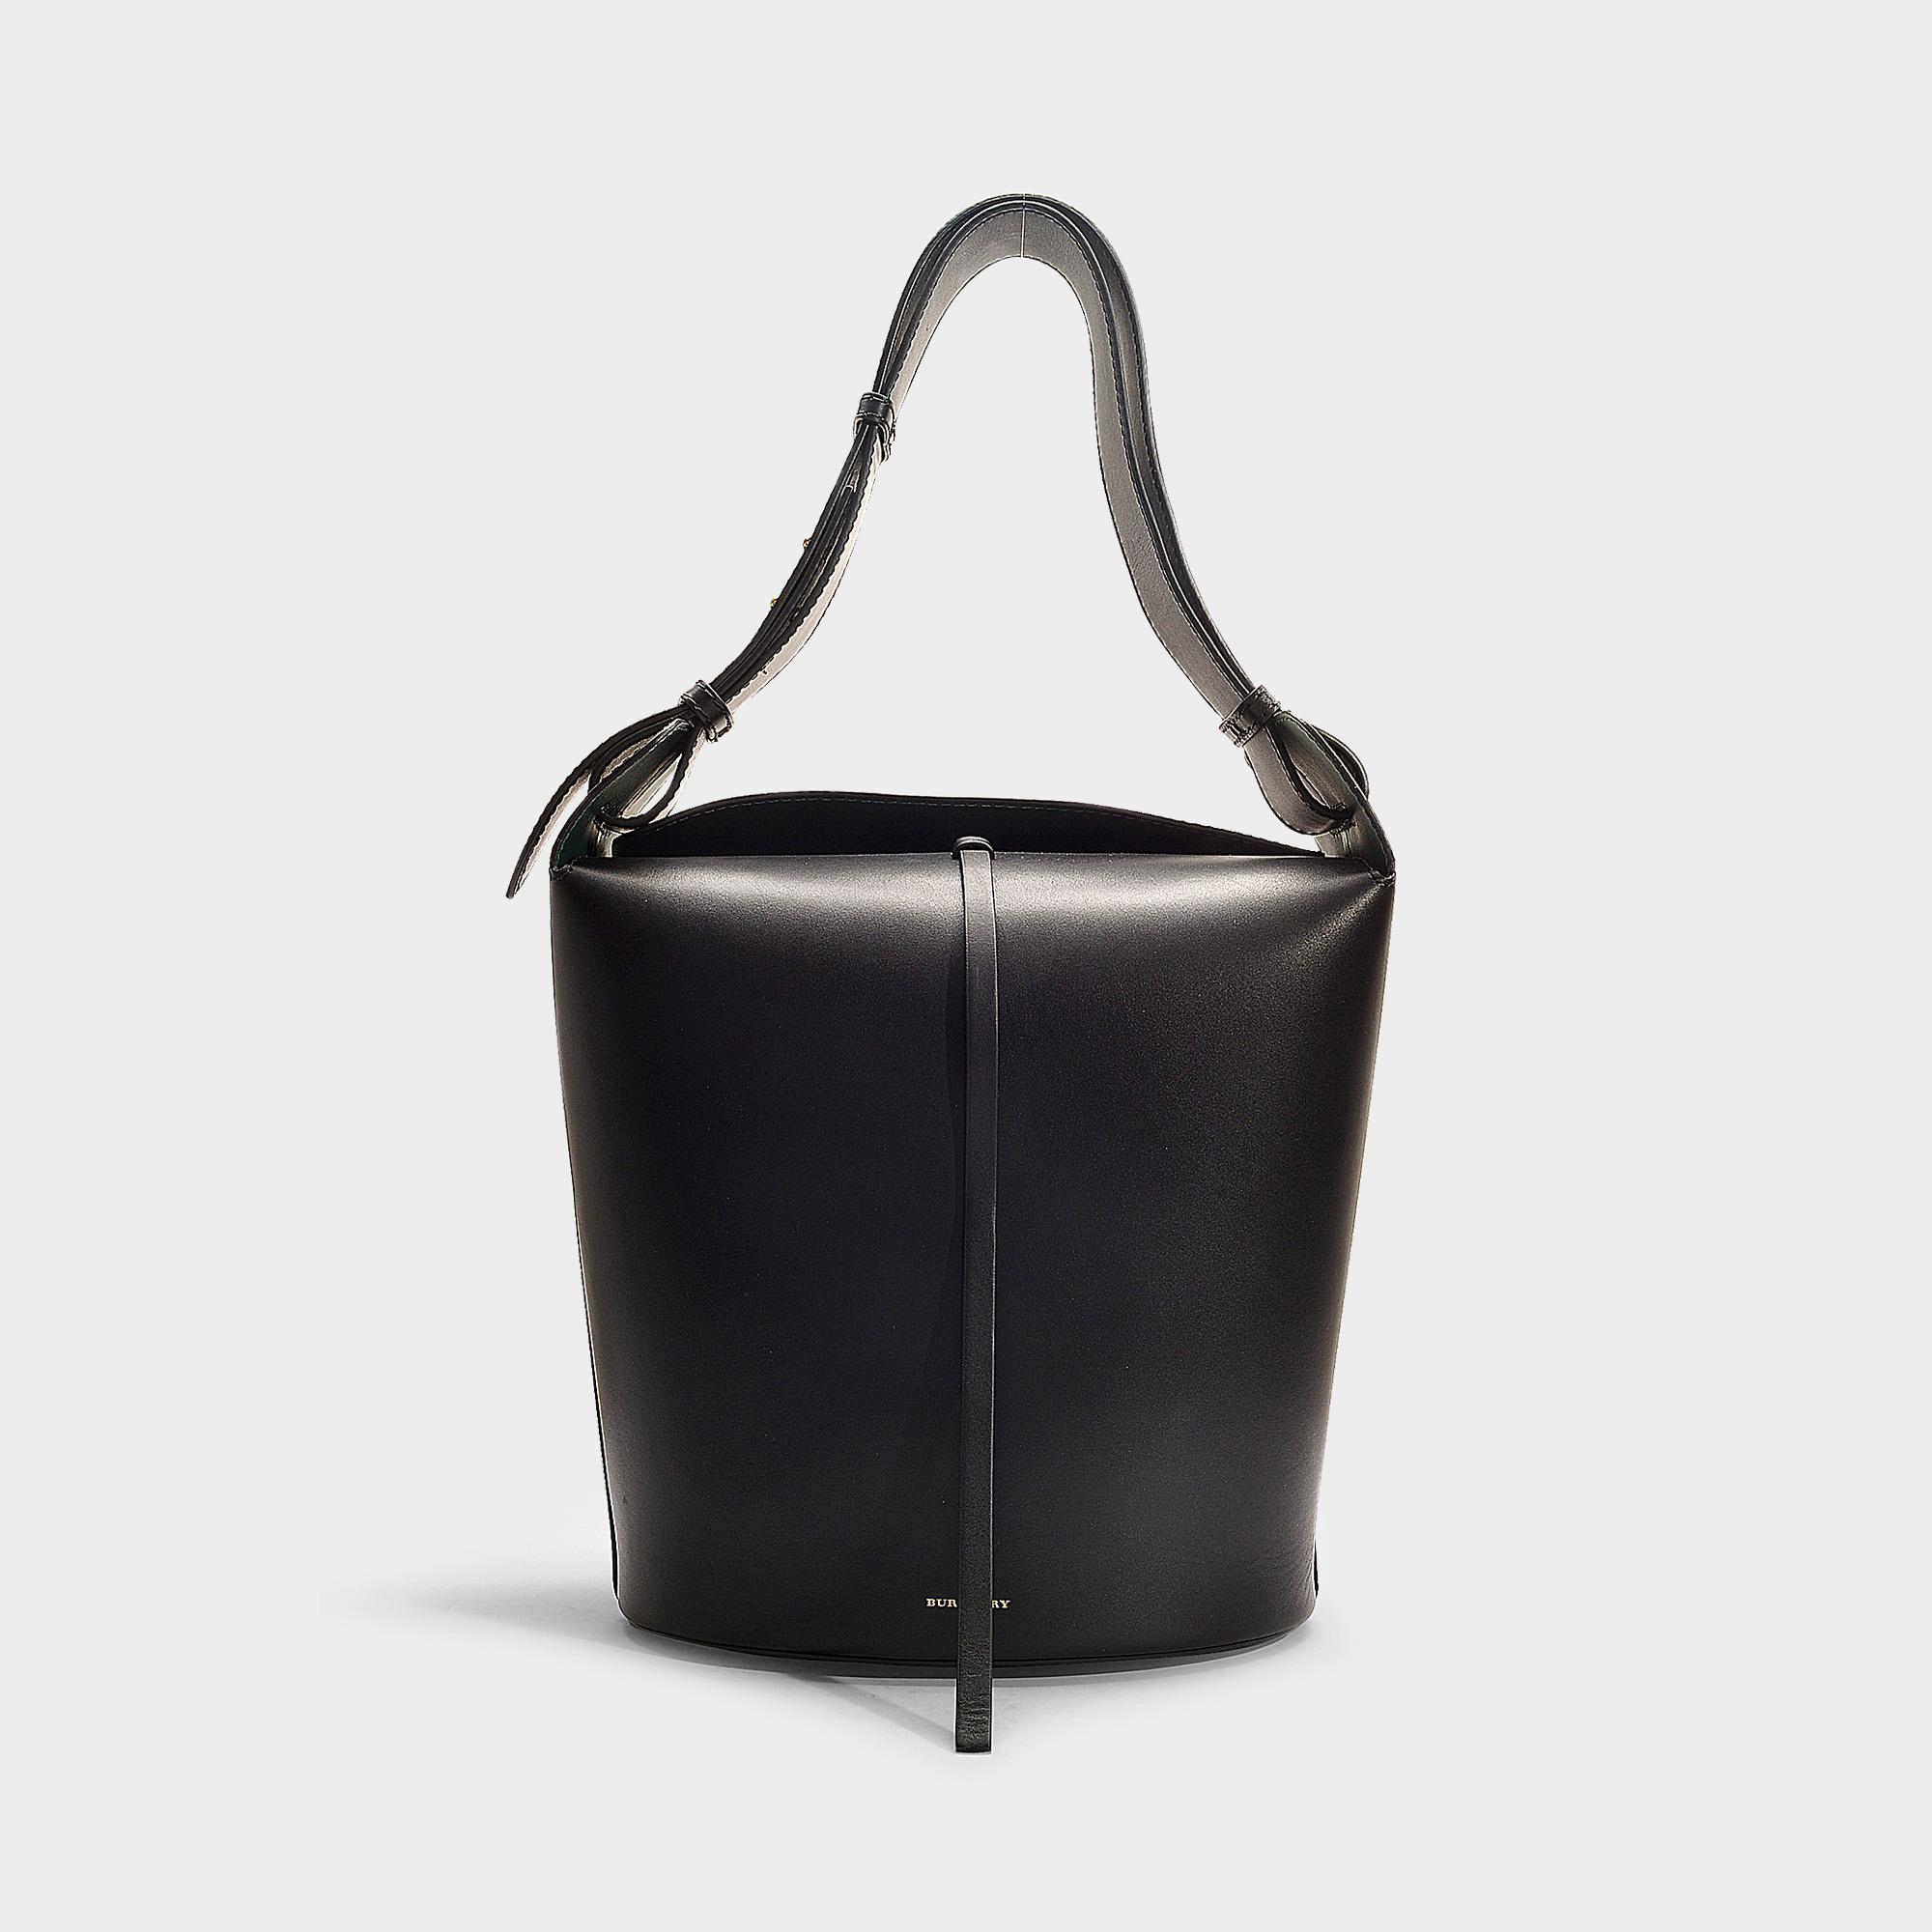 Burberry Leather Bucket Bag